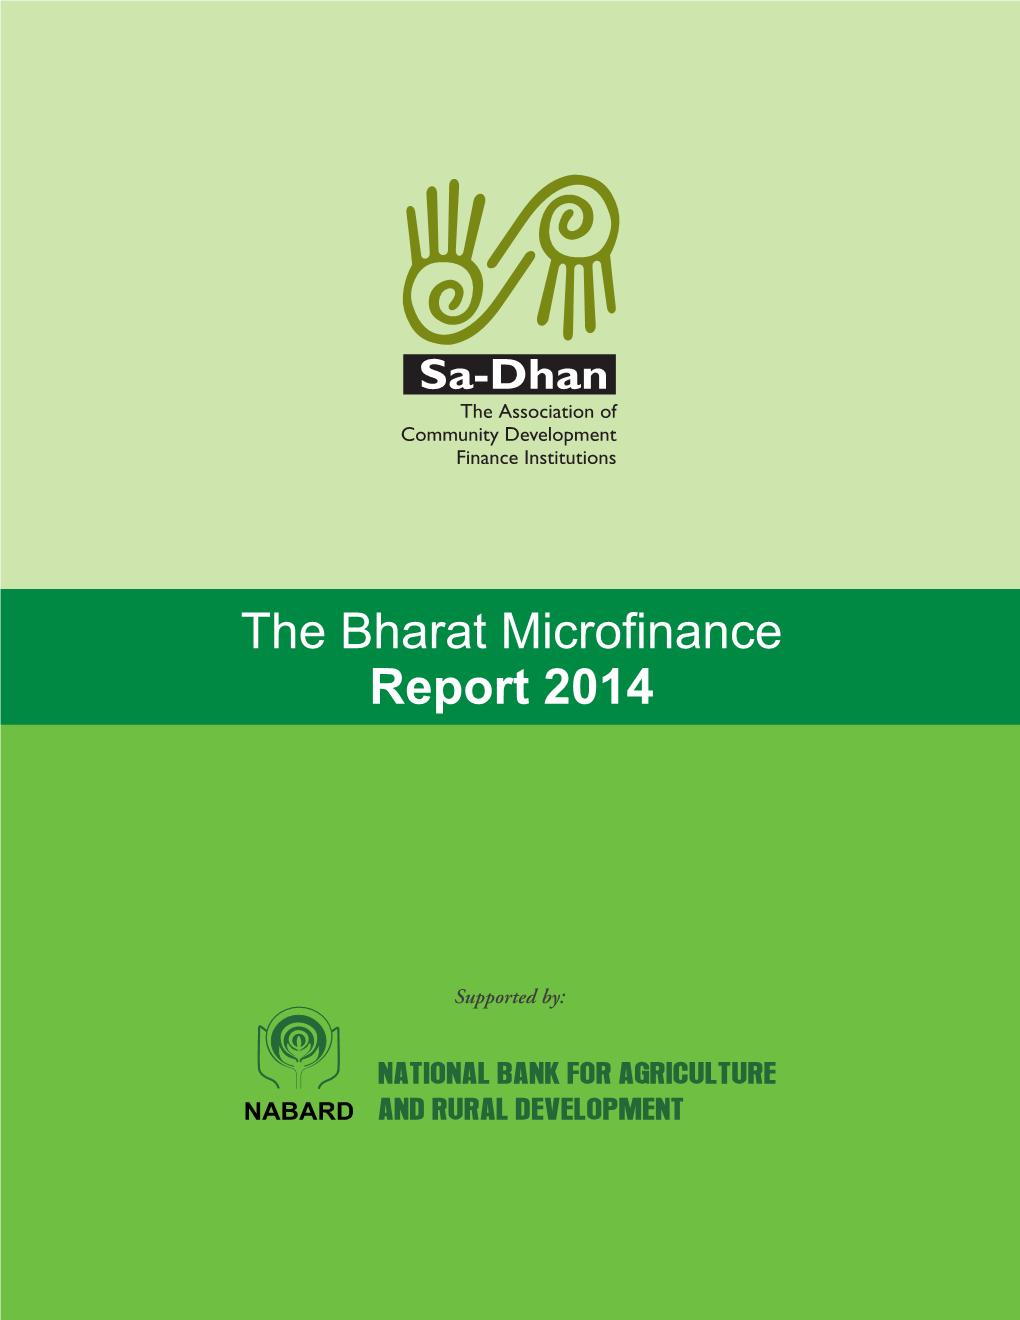 The Bharat Microfinance Report 2014